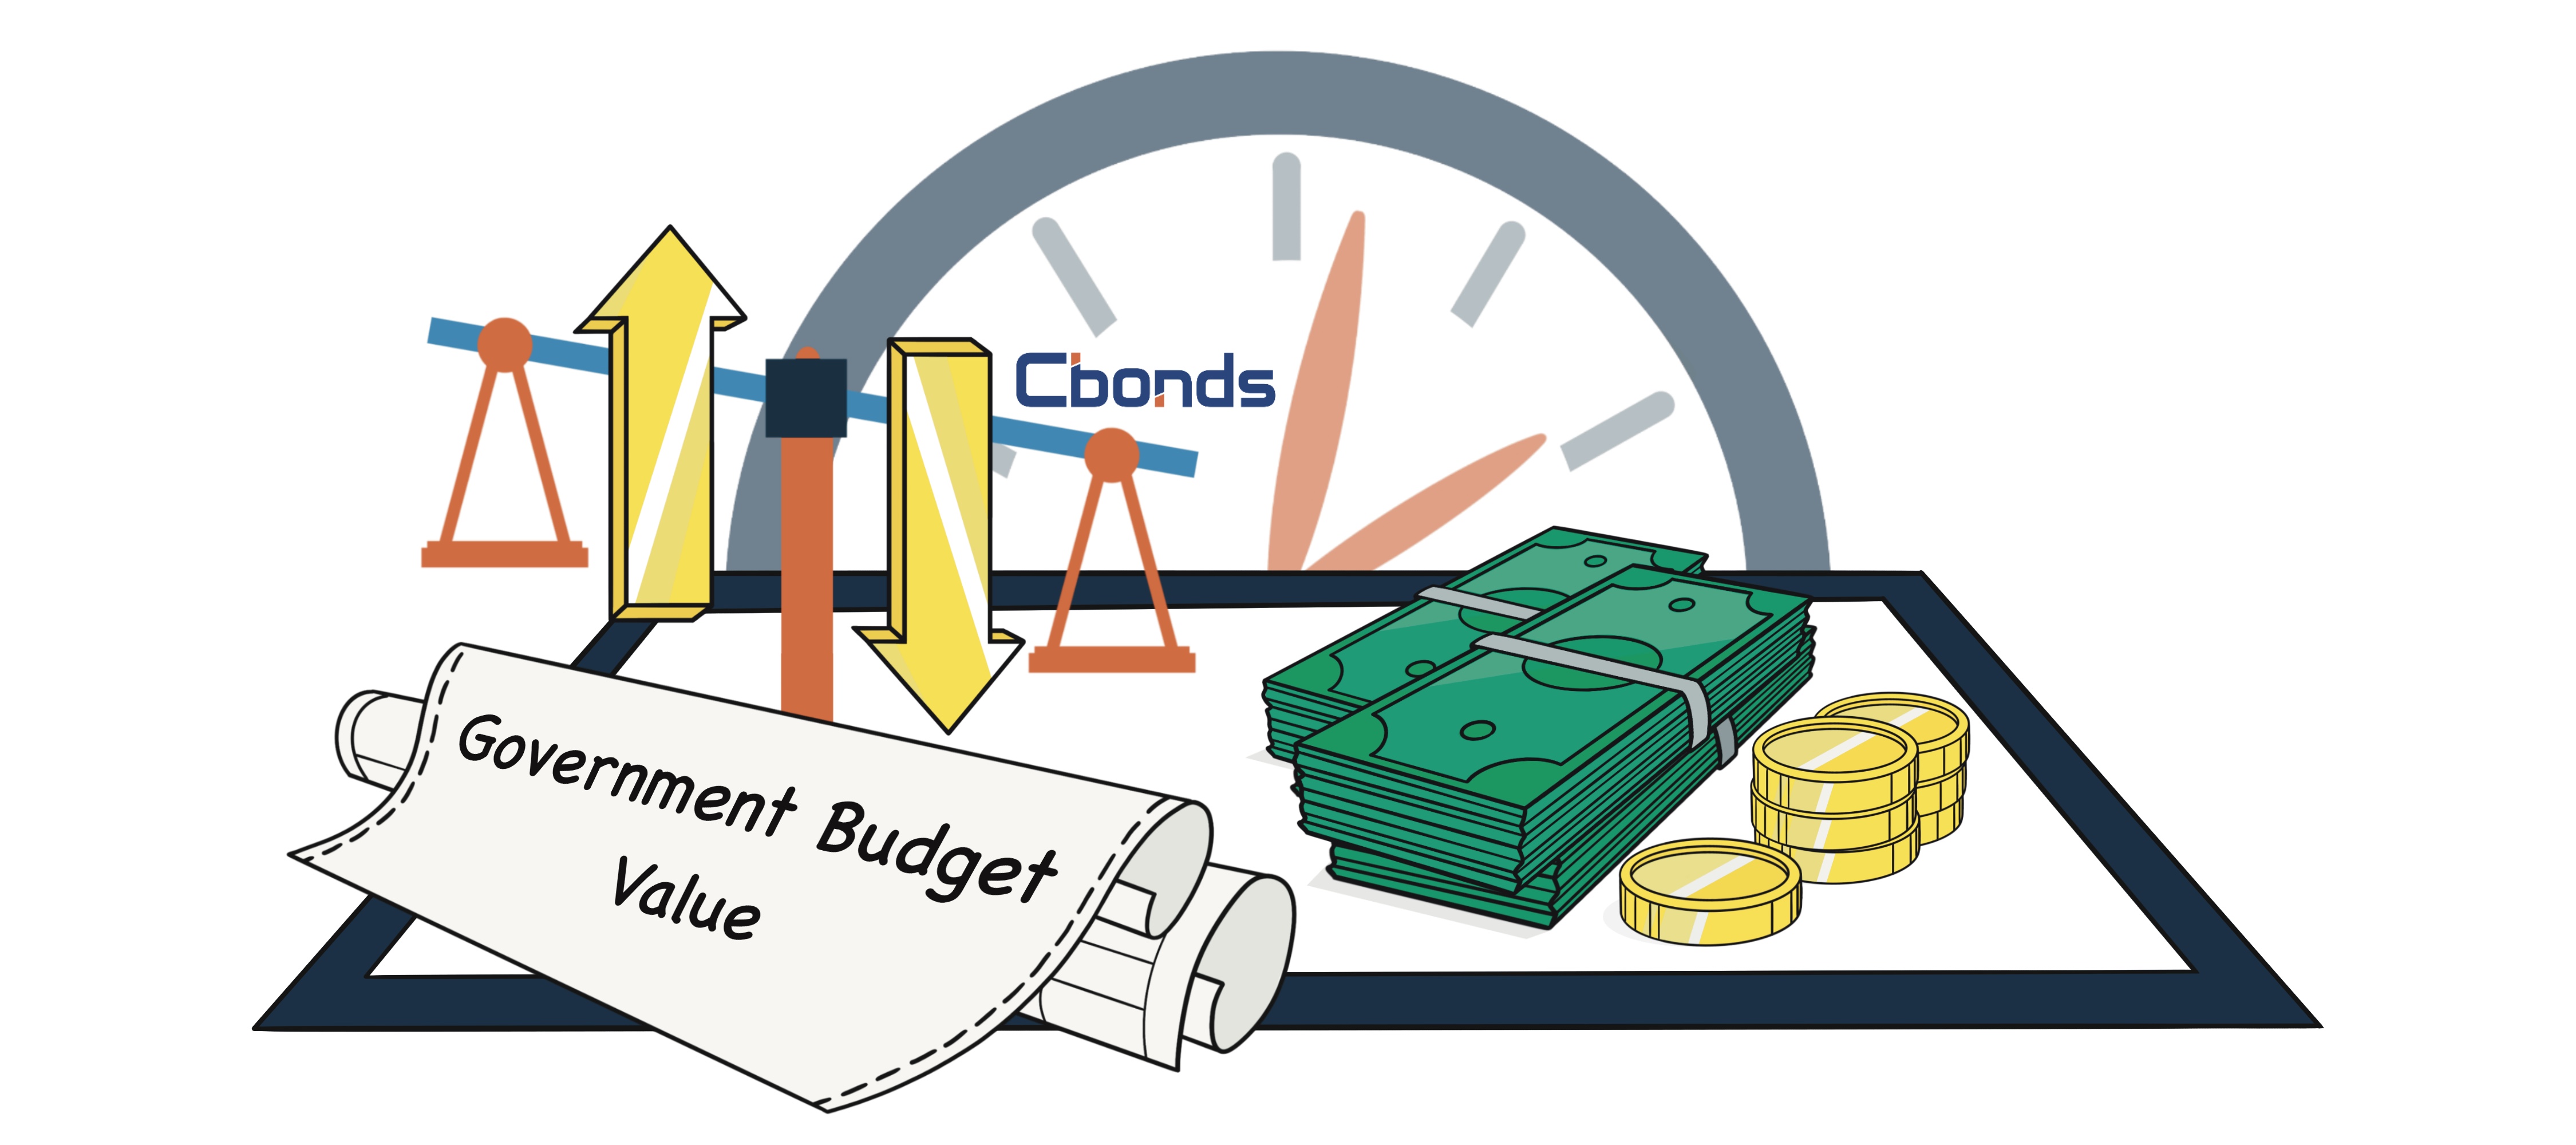 Government Budget Value